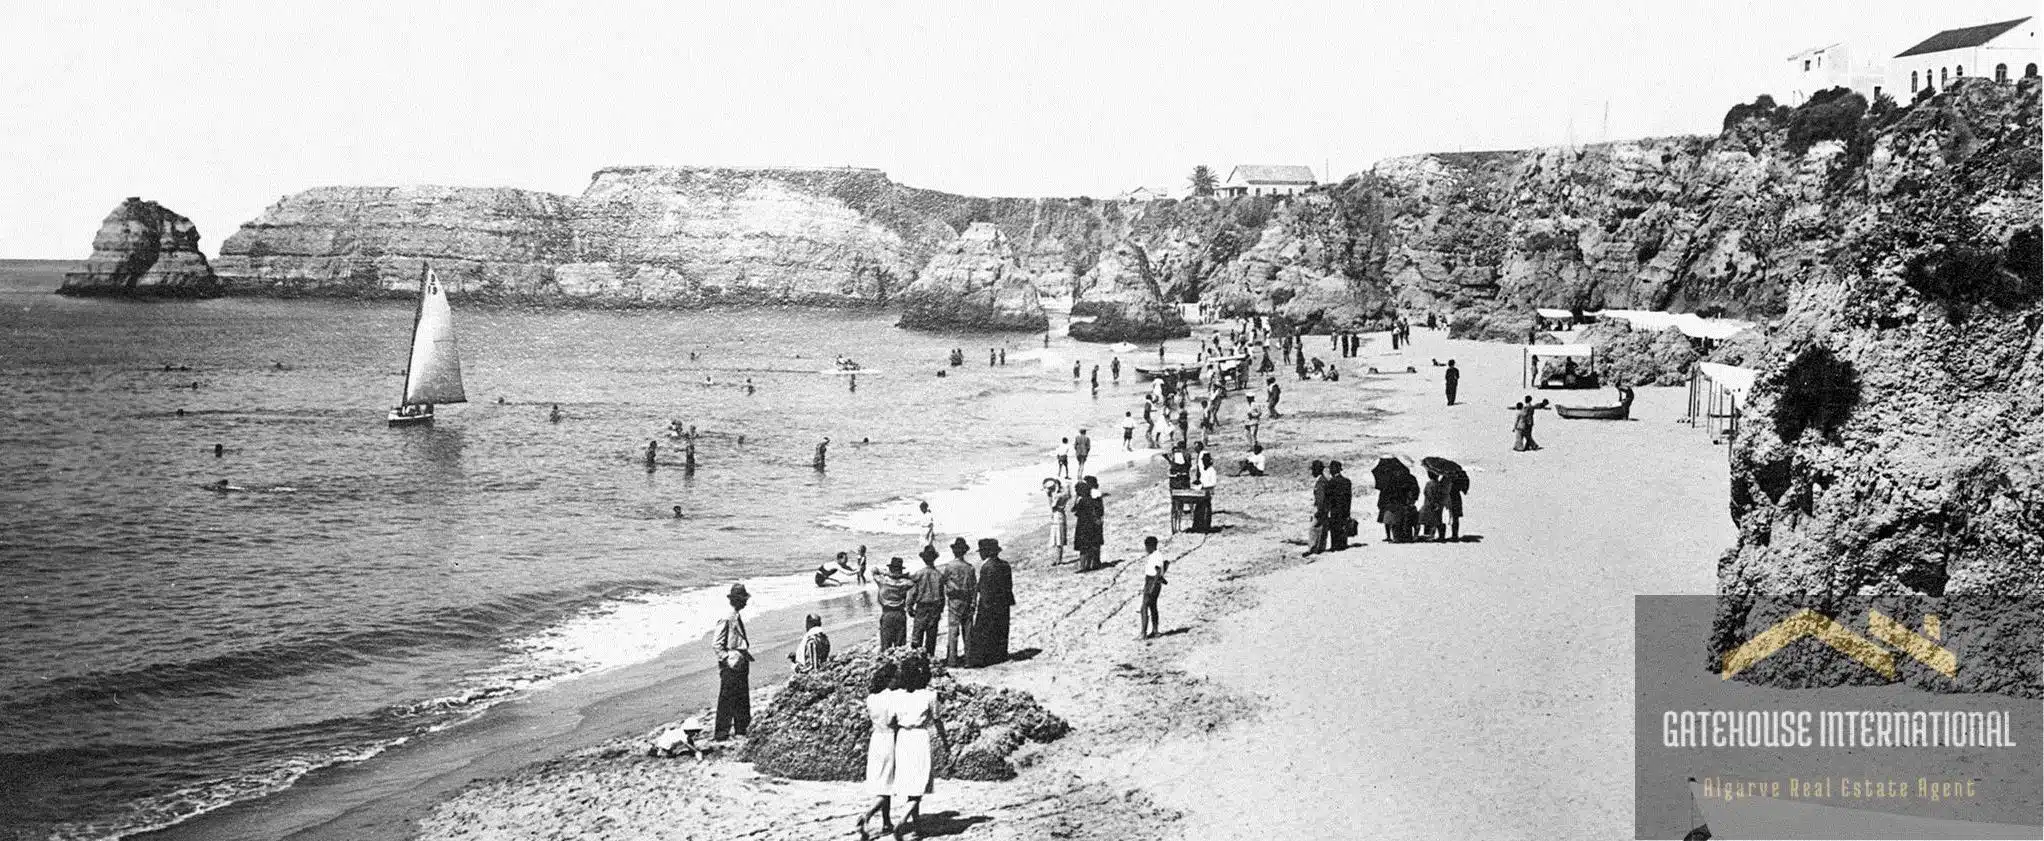 Algarve before tourism in 1950s